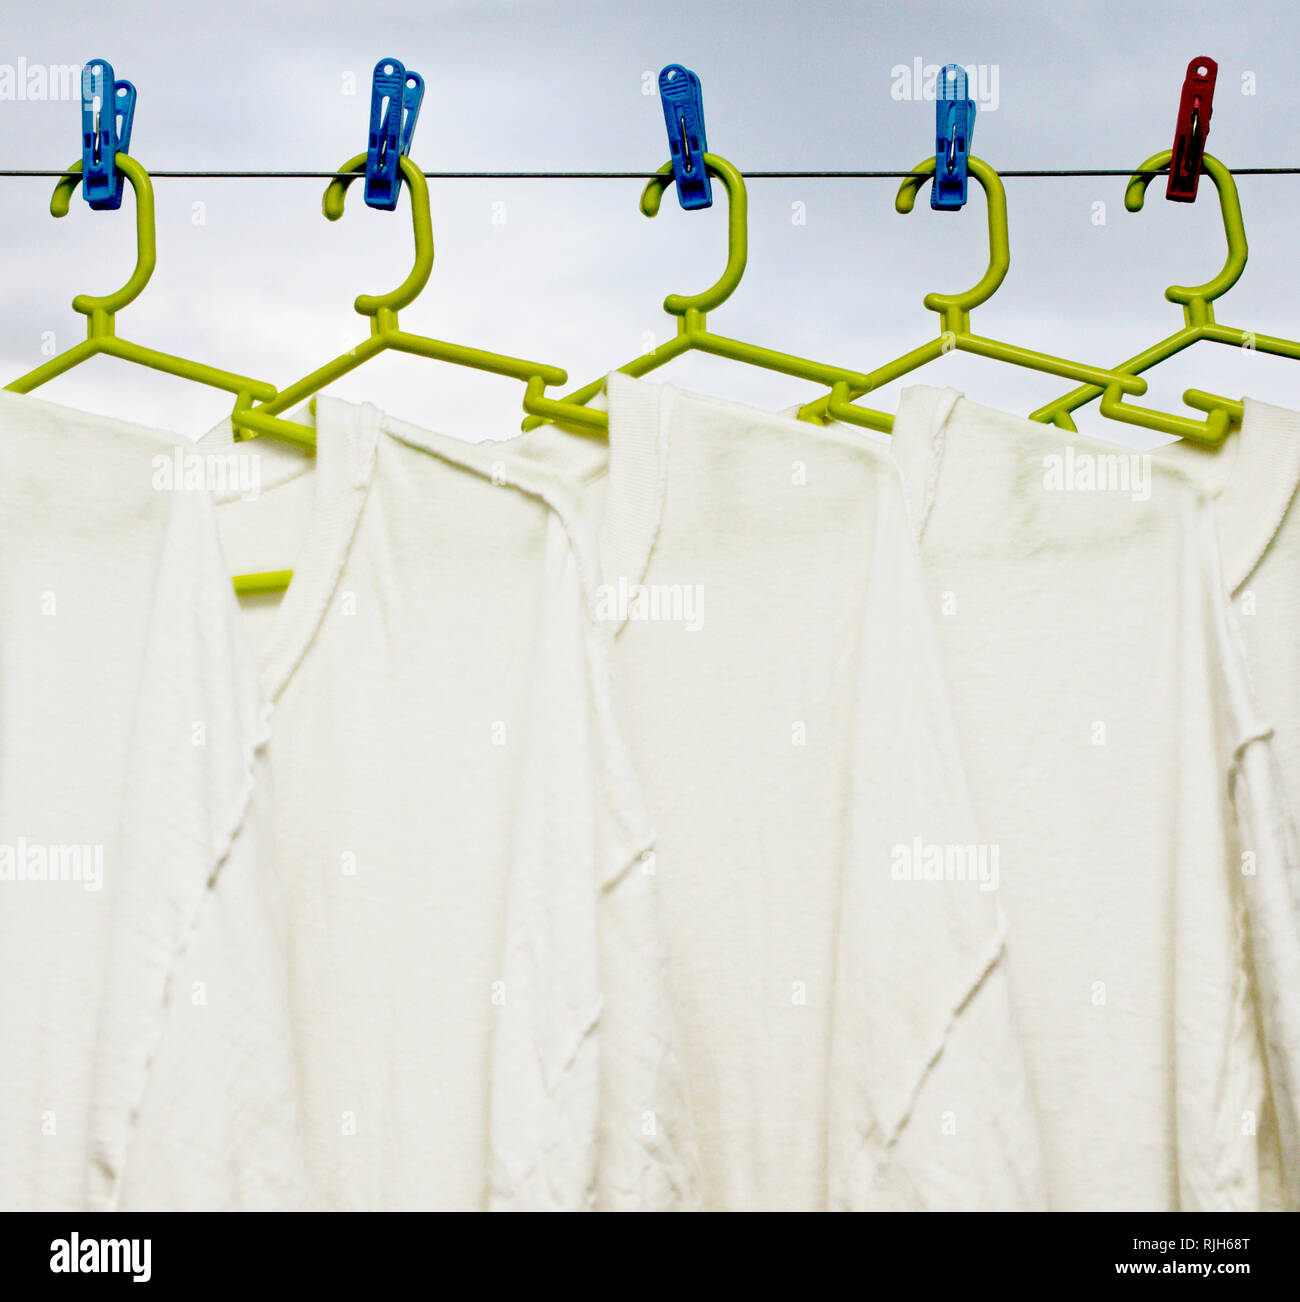 Hemden zum Trocknen aufhängen Stockfotografie - Alamy